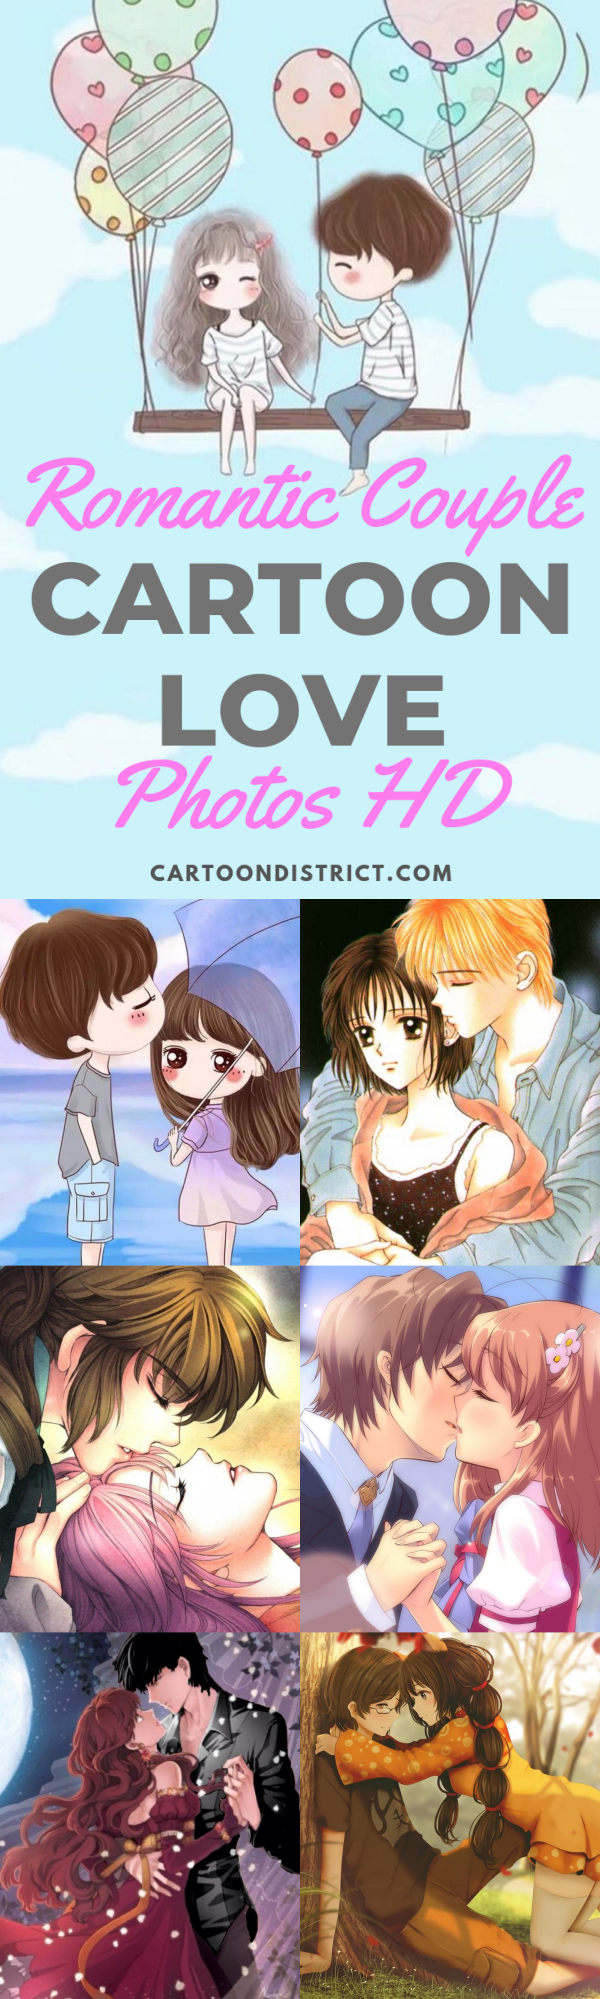 40 Romantic Couple Cartoon Love Photos HD - Cartoon District